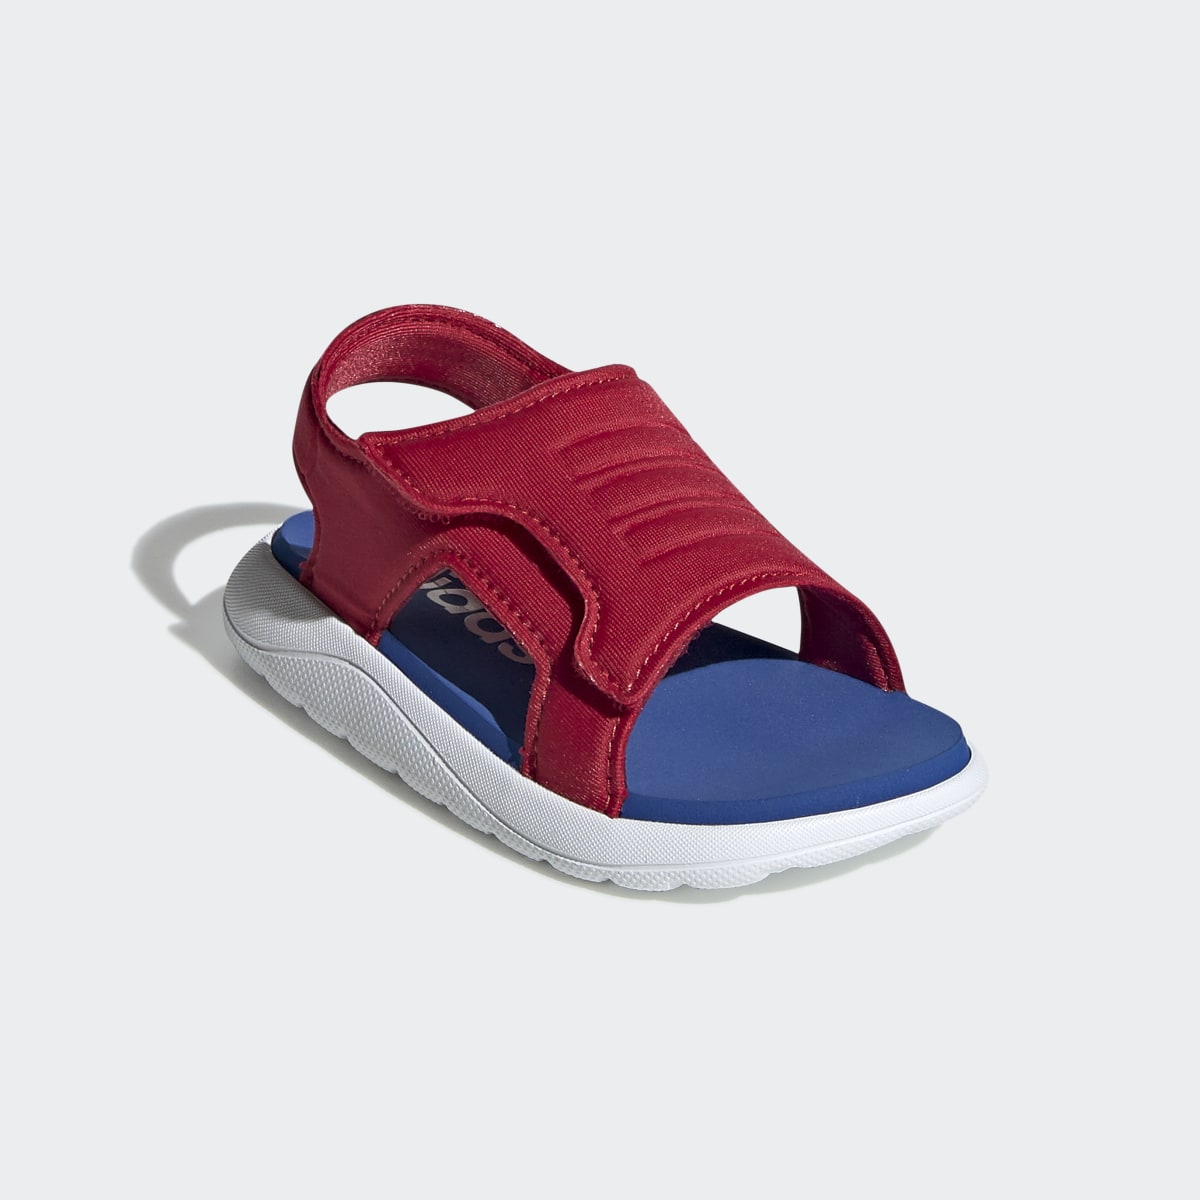 Adidas Comfort Sandals. 5